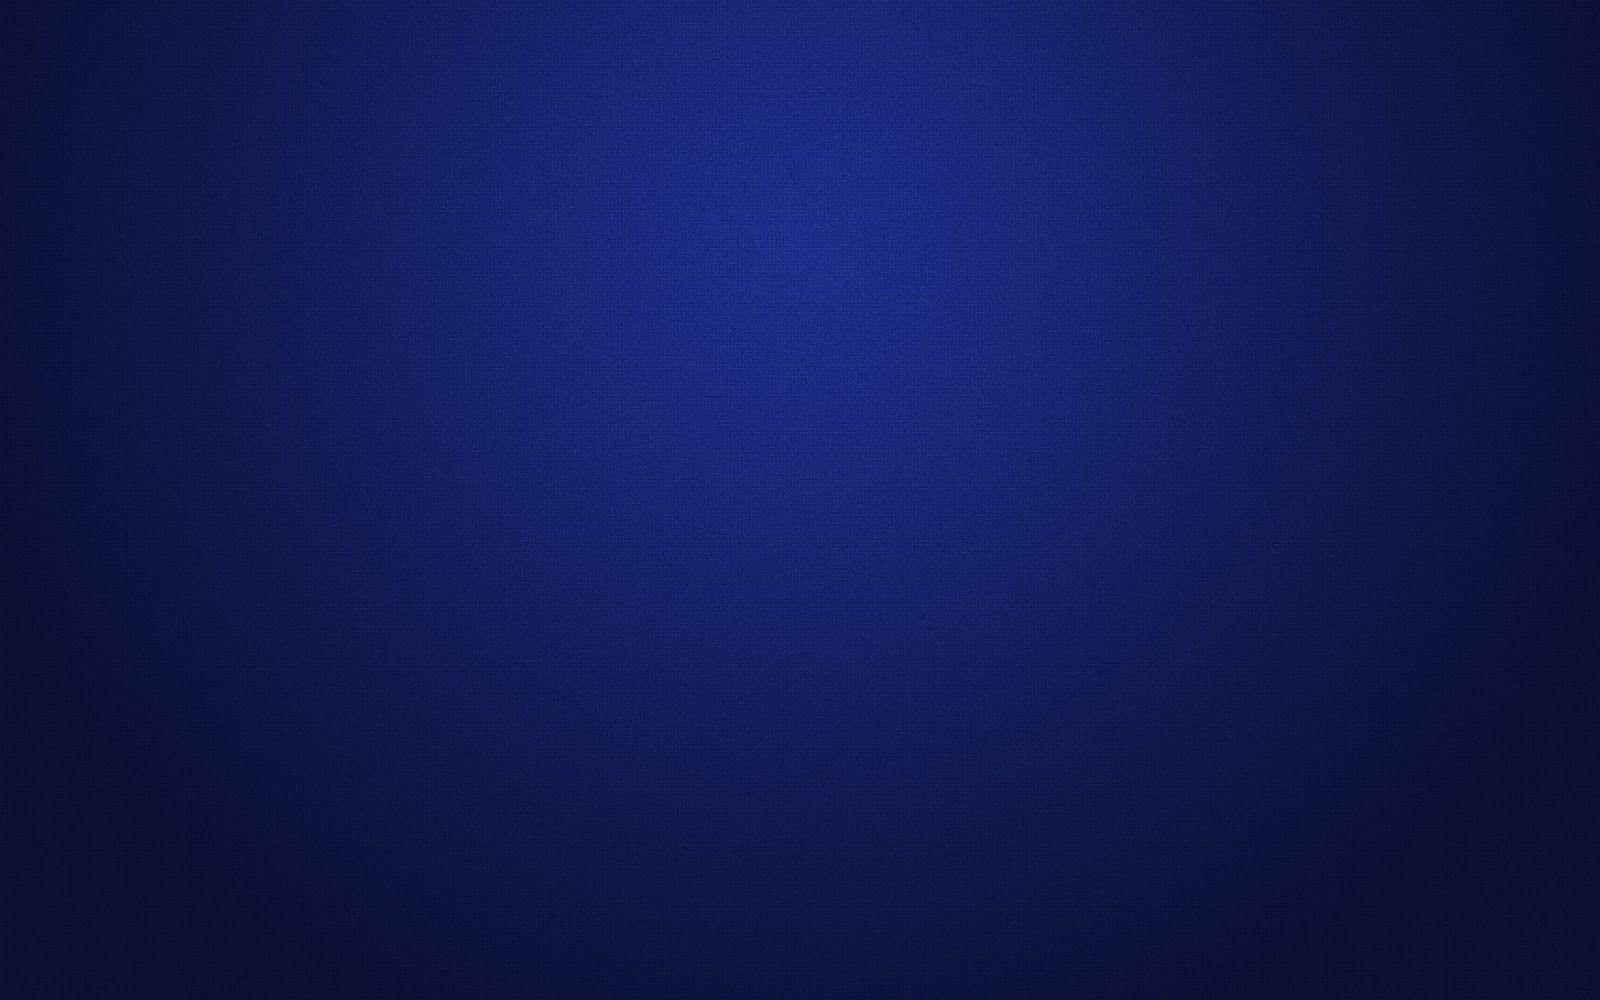 Dark Blue Backgrounds Image Wallpaper Cave